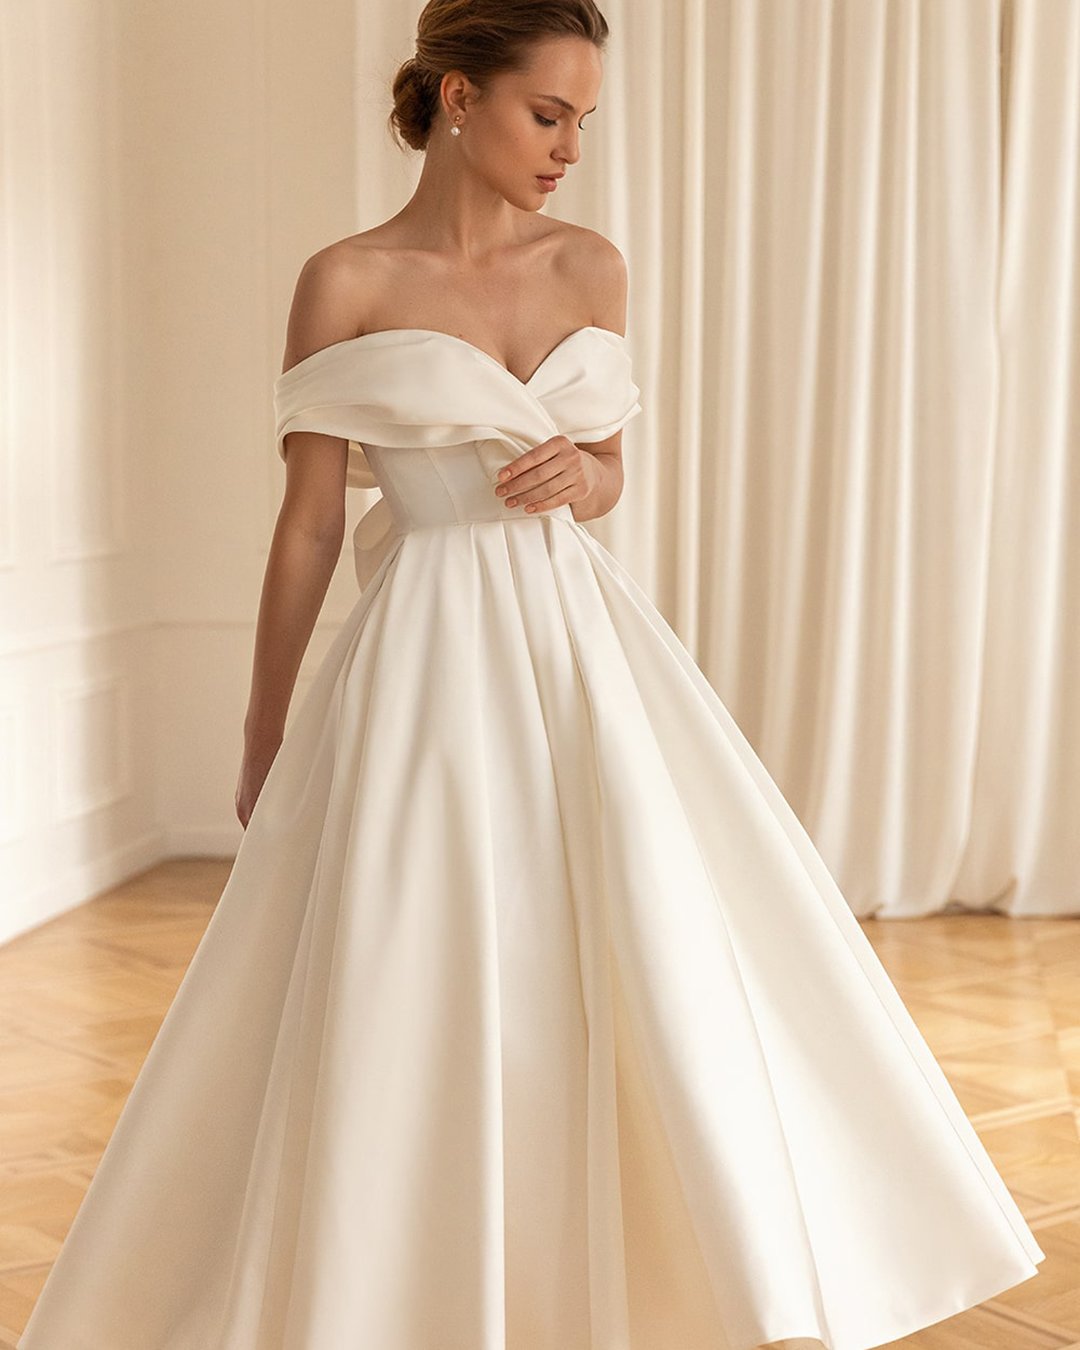 hottest wedding dresses simple strapless neckline tea length eva lendel